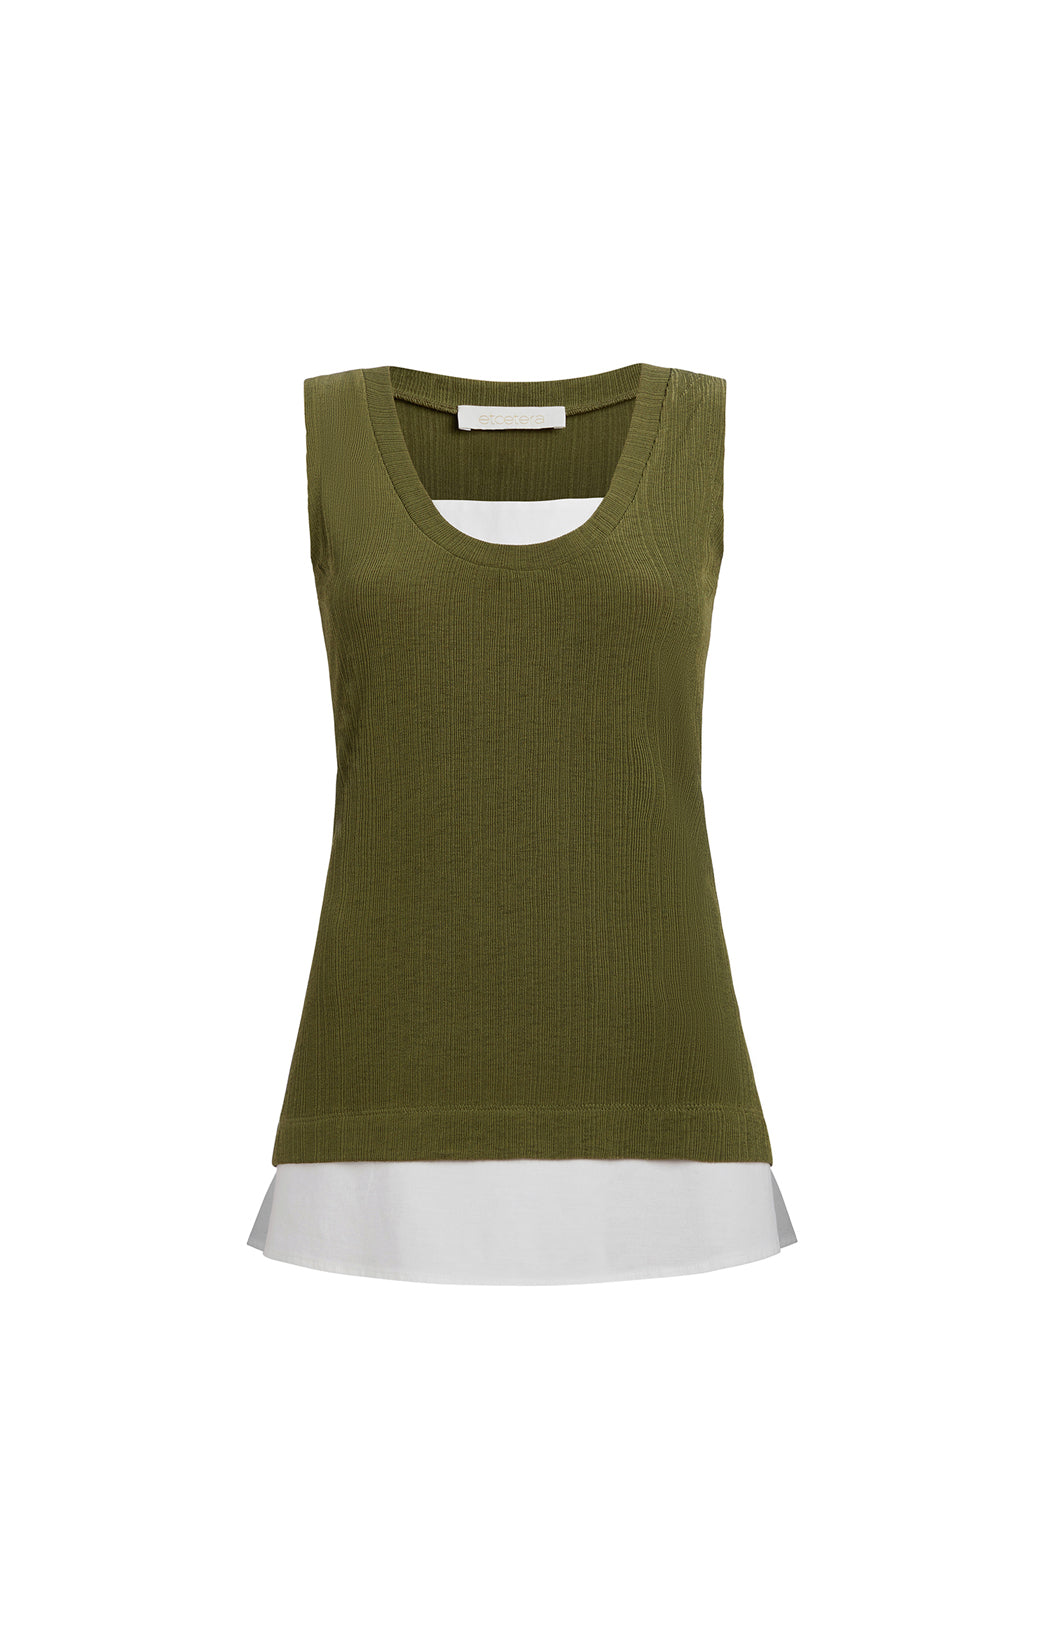 Tajine - Linen-Blend Knit Cardigan - Product Image